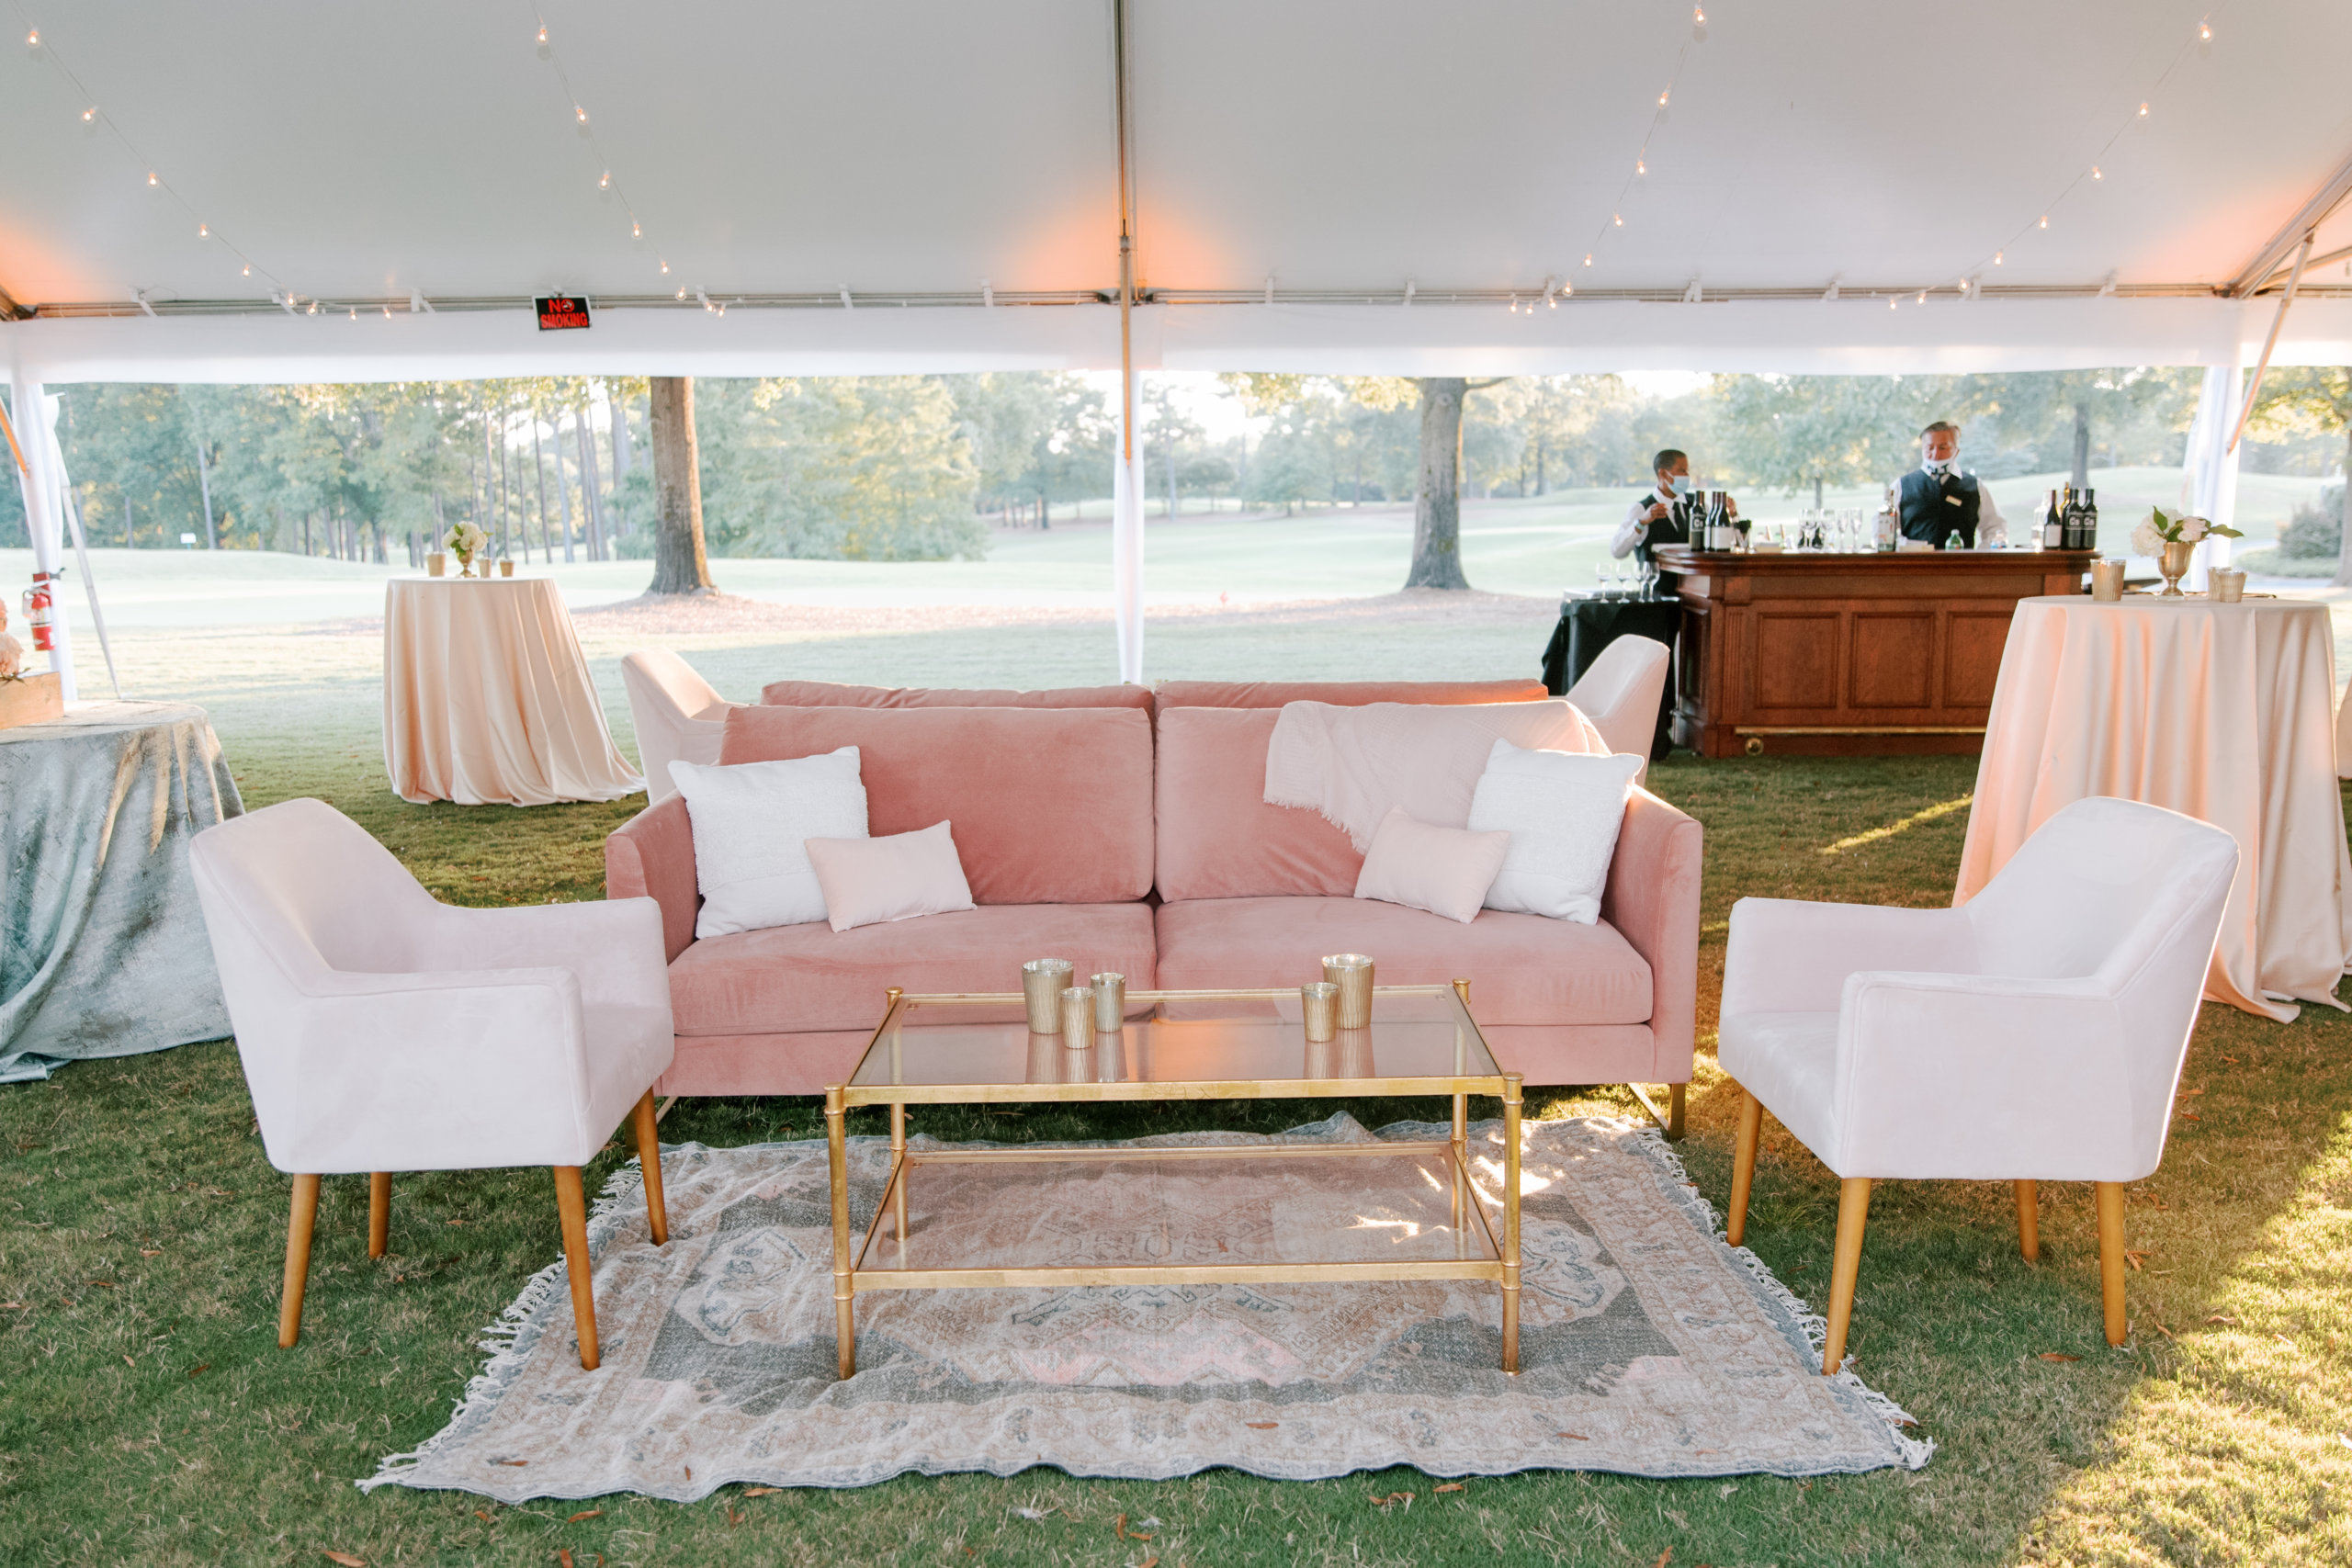 Peach vintage lounge set for wedding reception